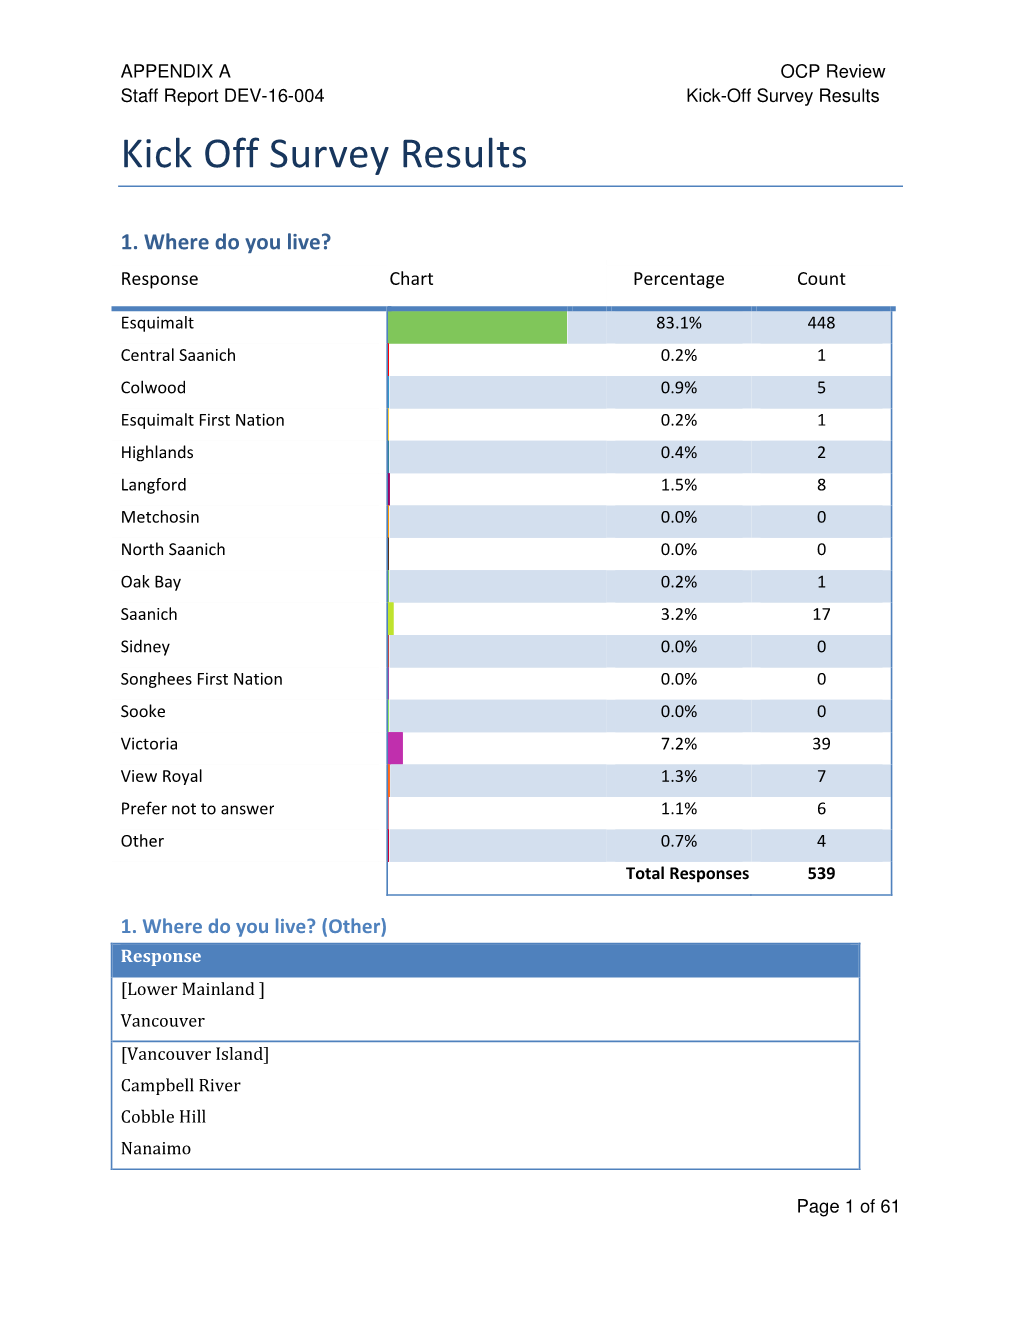 Kick Off Survey Results